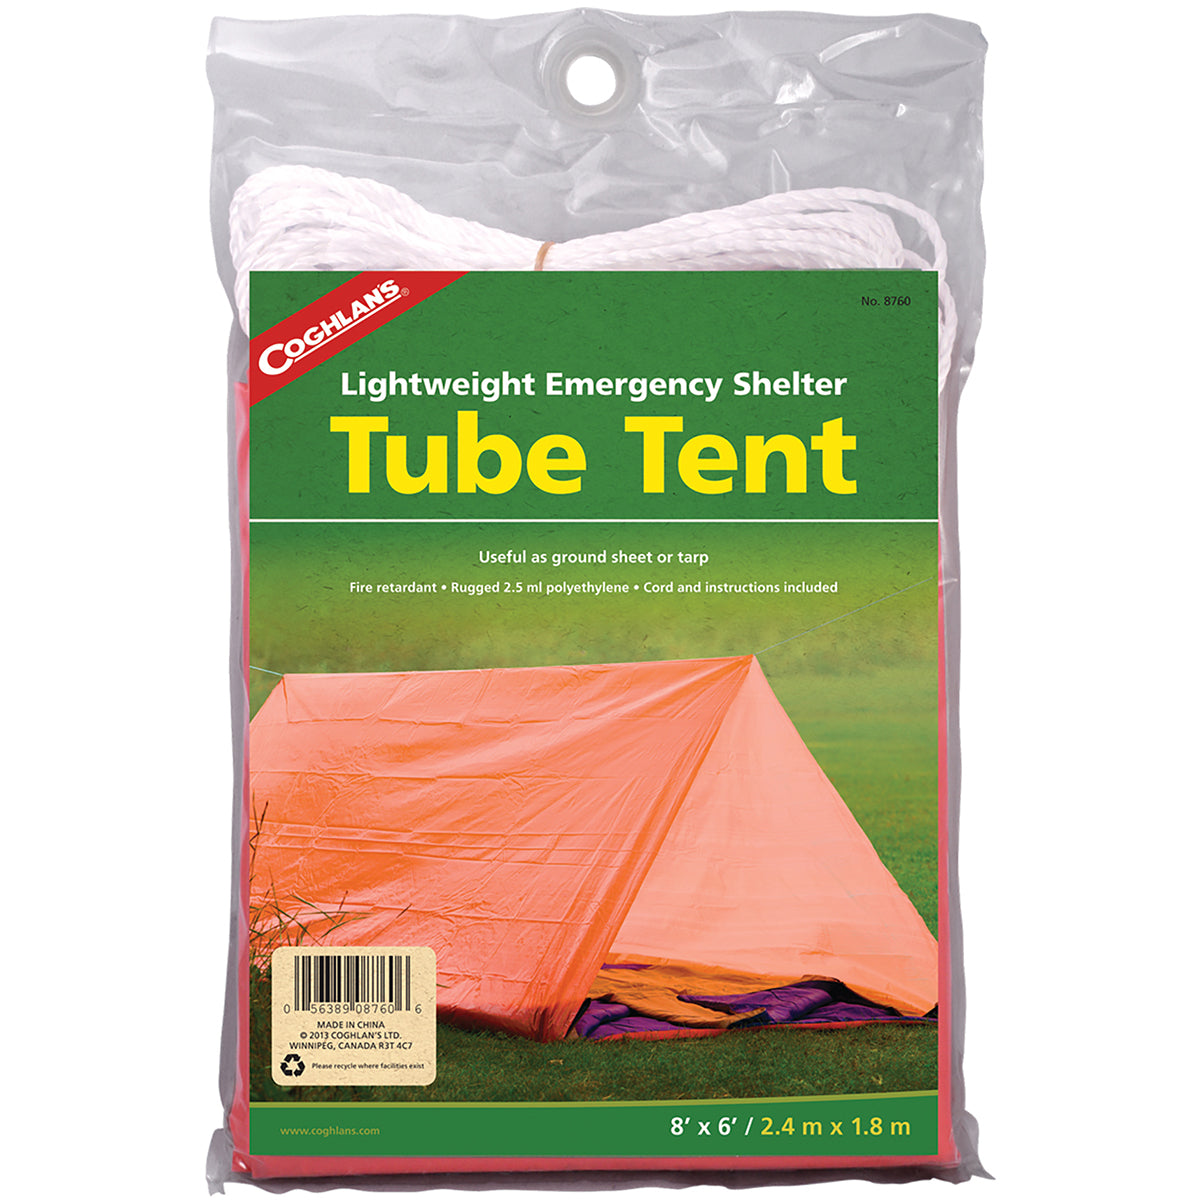 Coghlan's Lightweight Emergency Shelter Tube Tent, 2 Person, Ground Sheet/Tarp Coghlan's